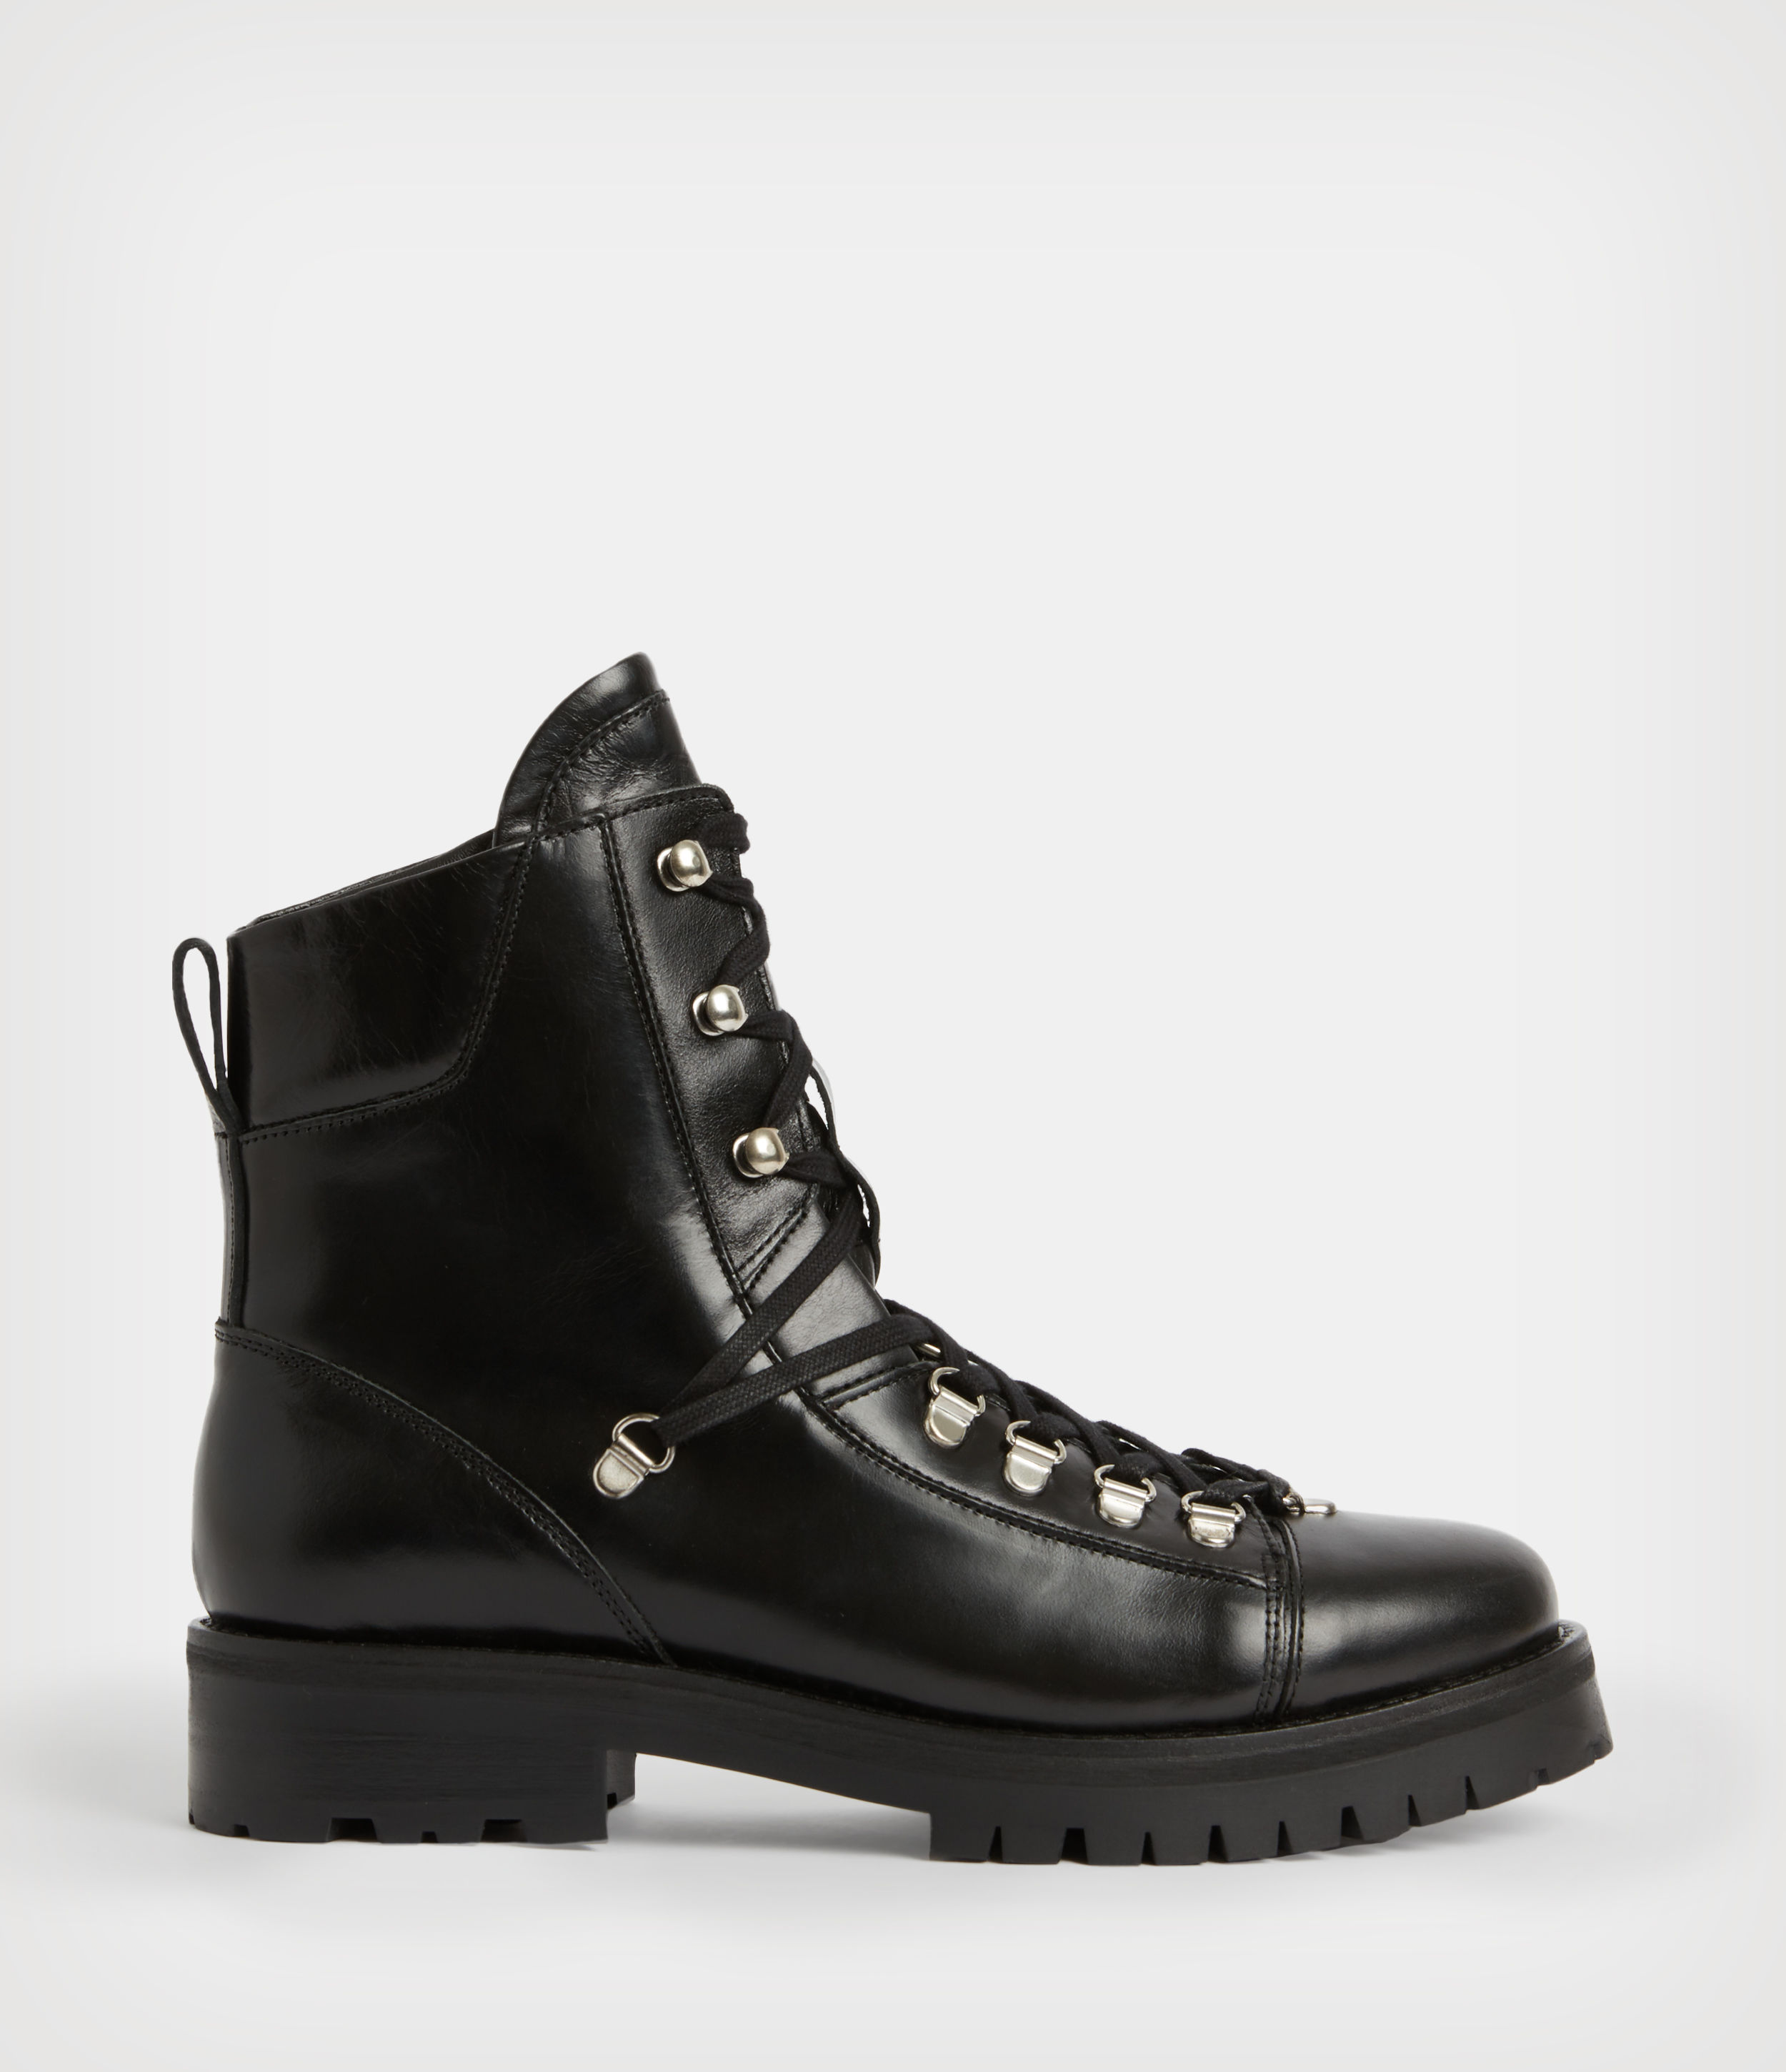 AllSaints Women's Leather Franka Round Toe Hiking Boots, Black, Size: UK 3